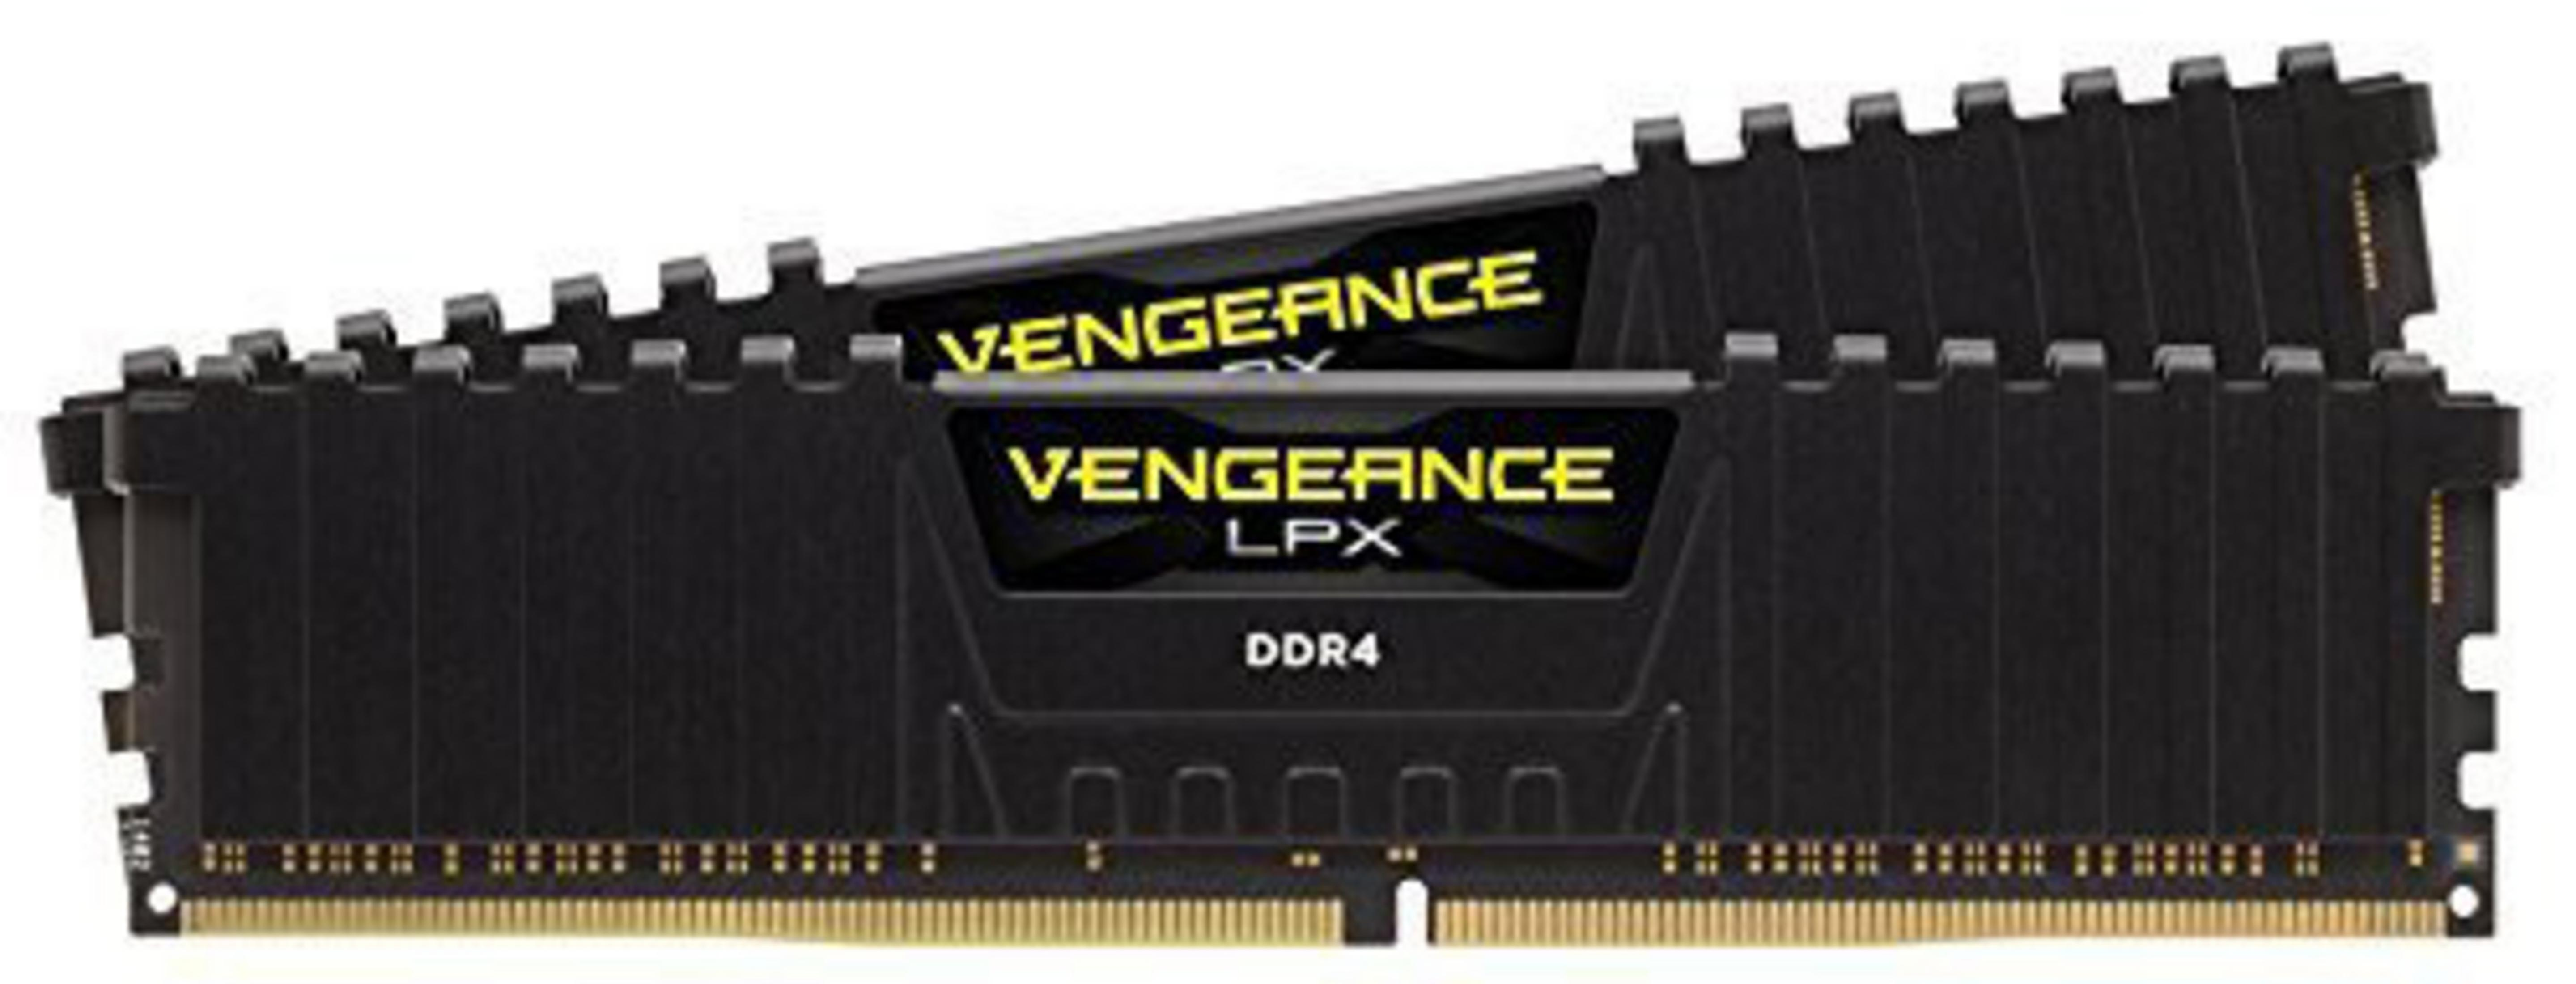 Arbeitsspeicher 2133MHZ CORSAIR LPX 16GB VENGEANCE 16 DDR4 DDR4 CMK16GX4M2A2133C13 GB